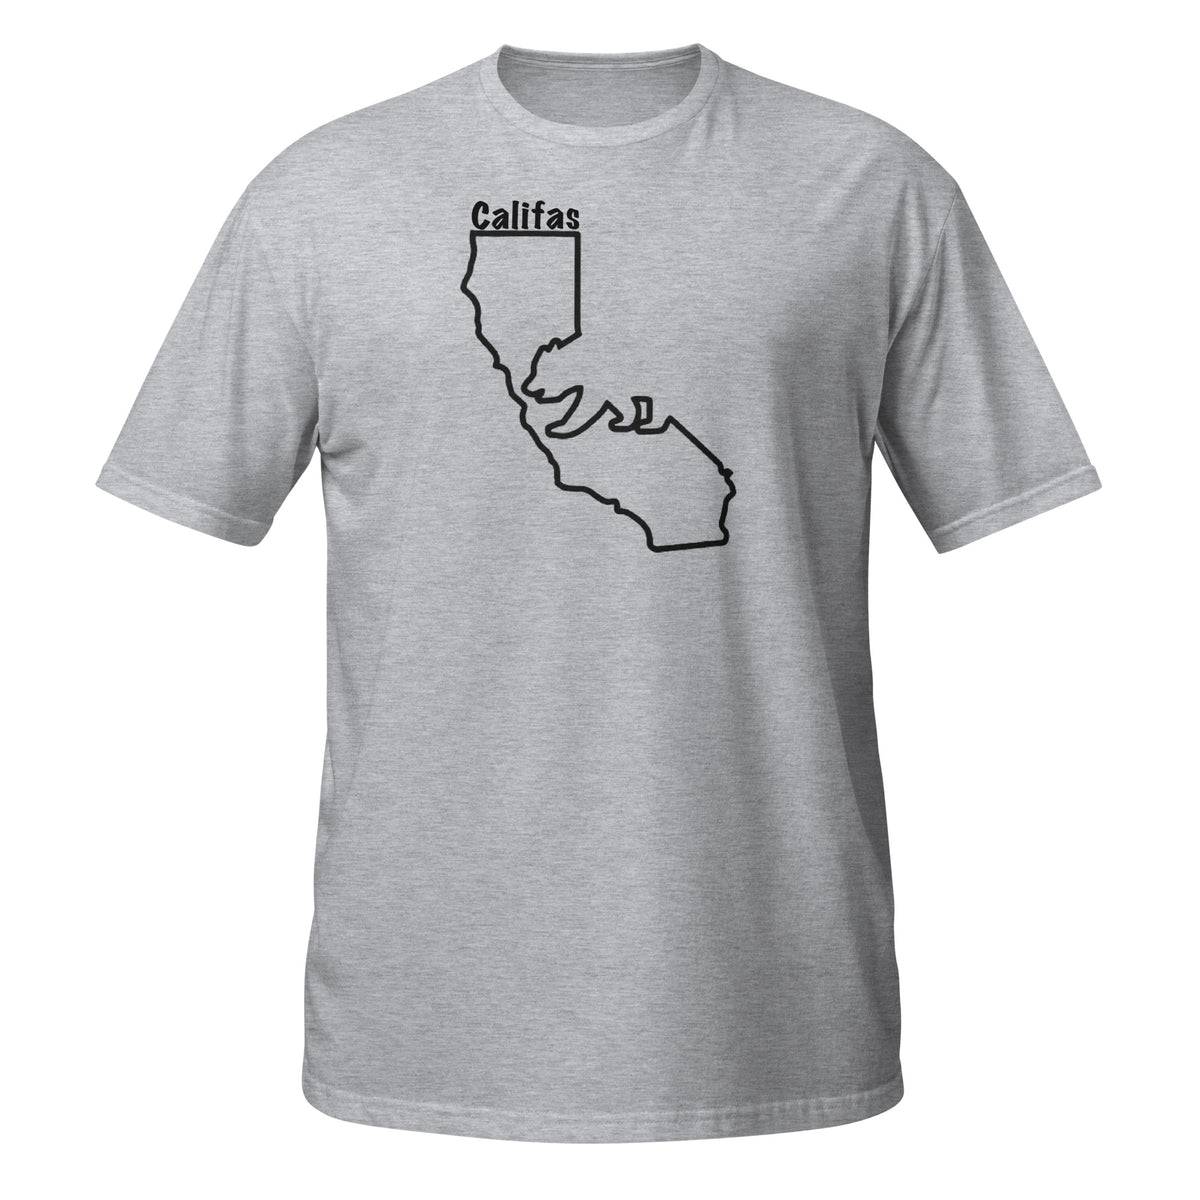 Califas (California) T-Shirt